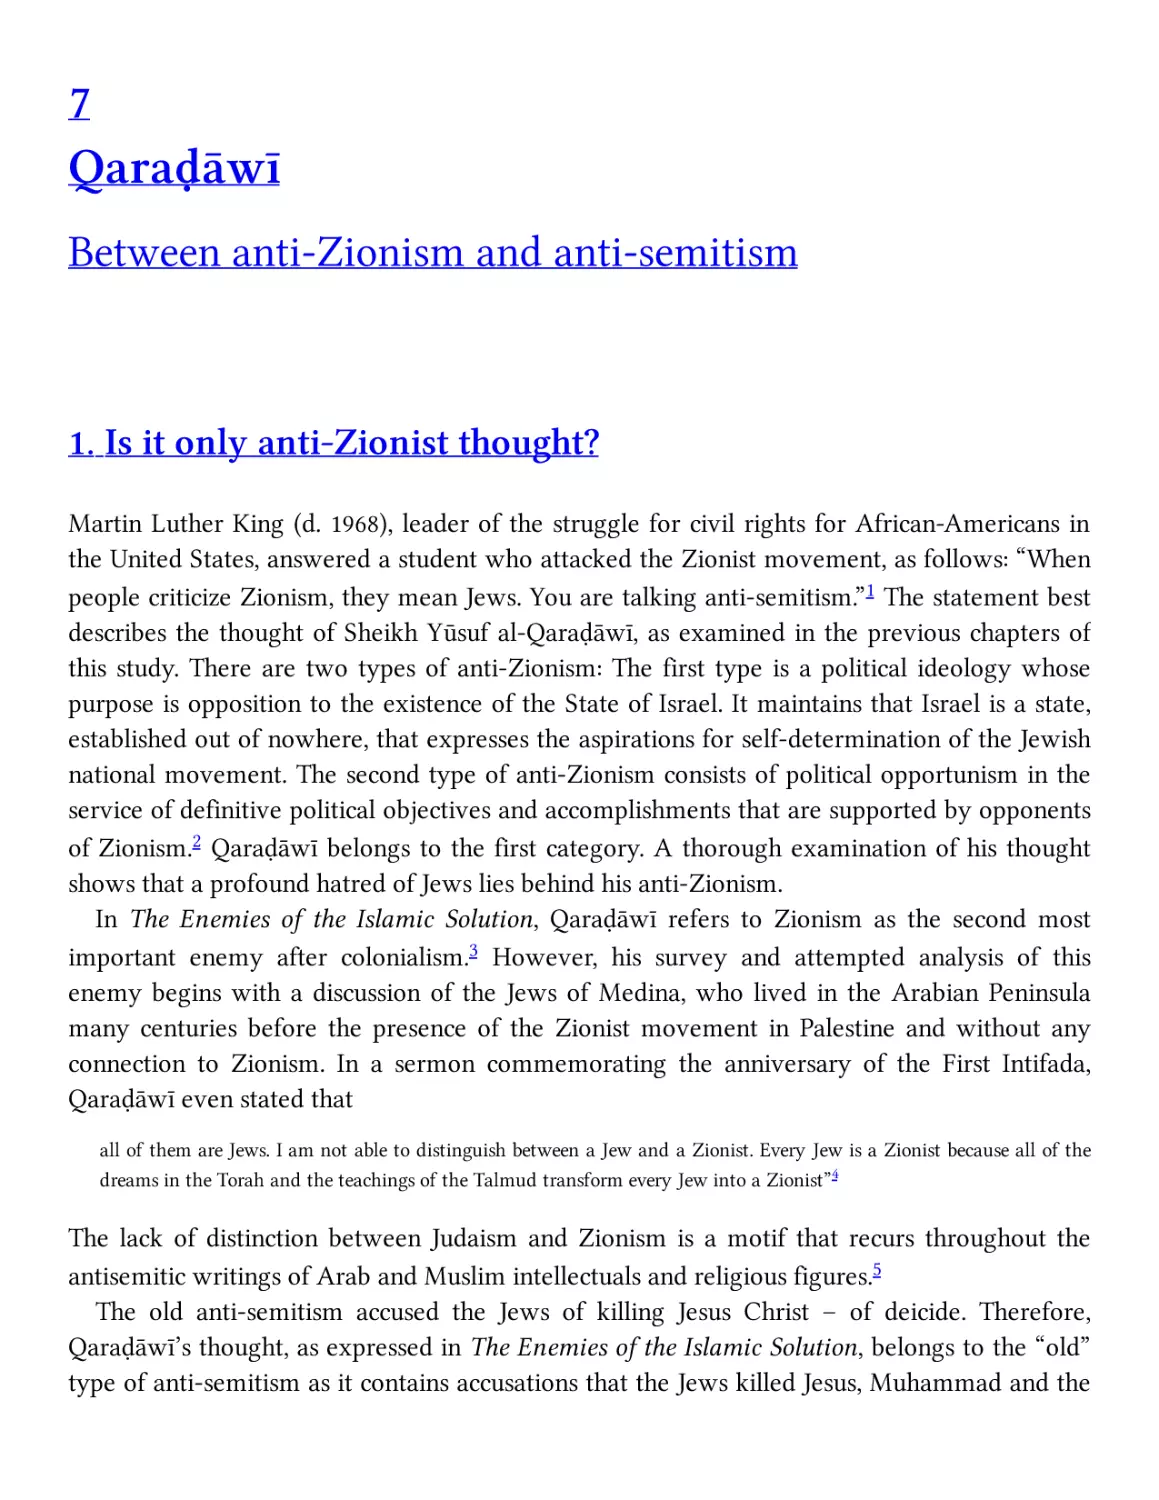 7 QaraḊāwī
1. Is it only anti-Zionist thought?